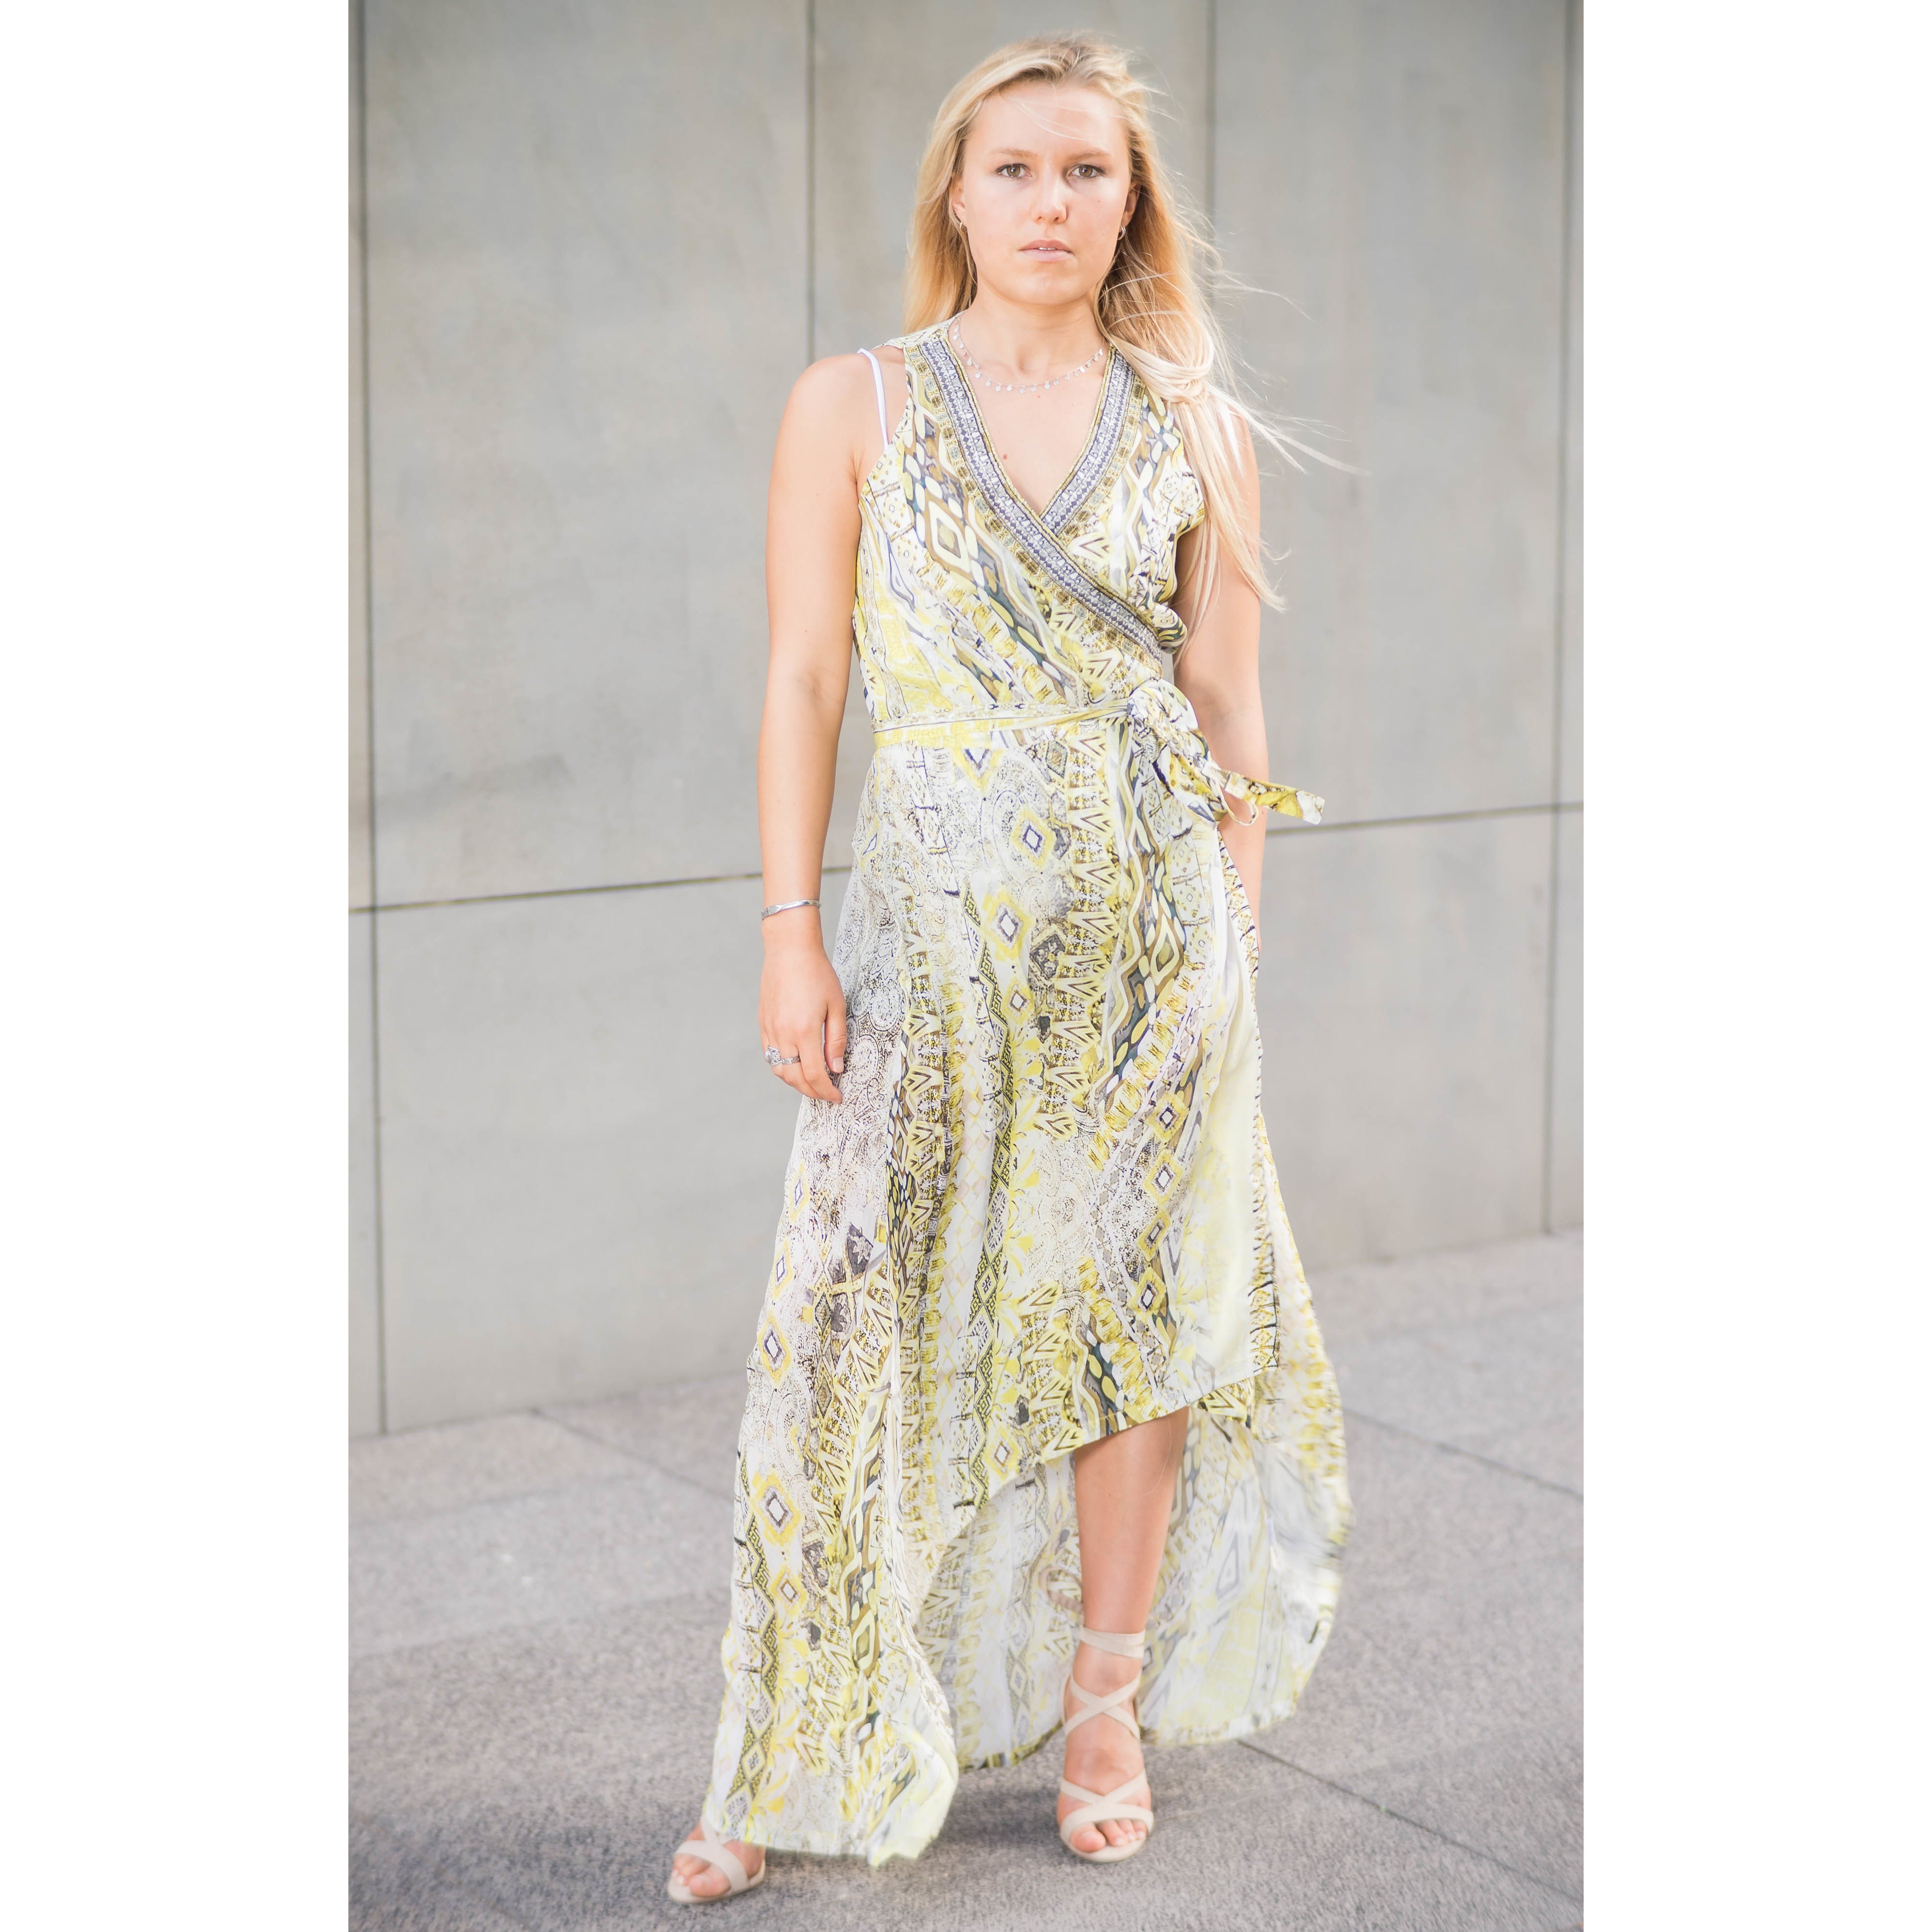 Yellow Silk Patterned Wrap Dress Long